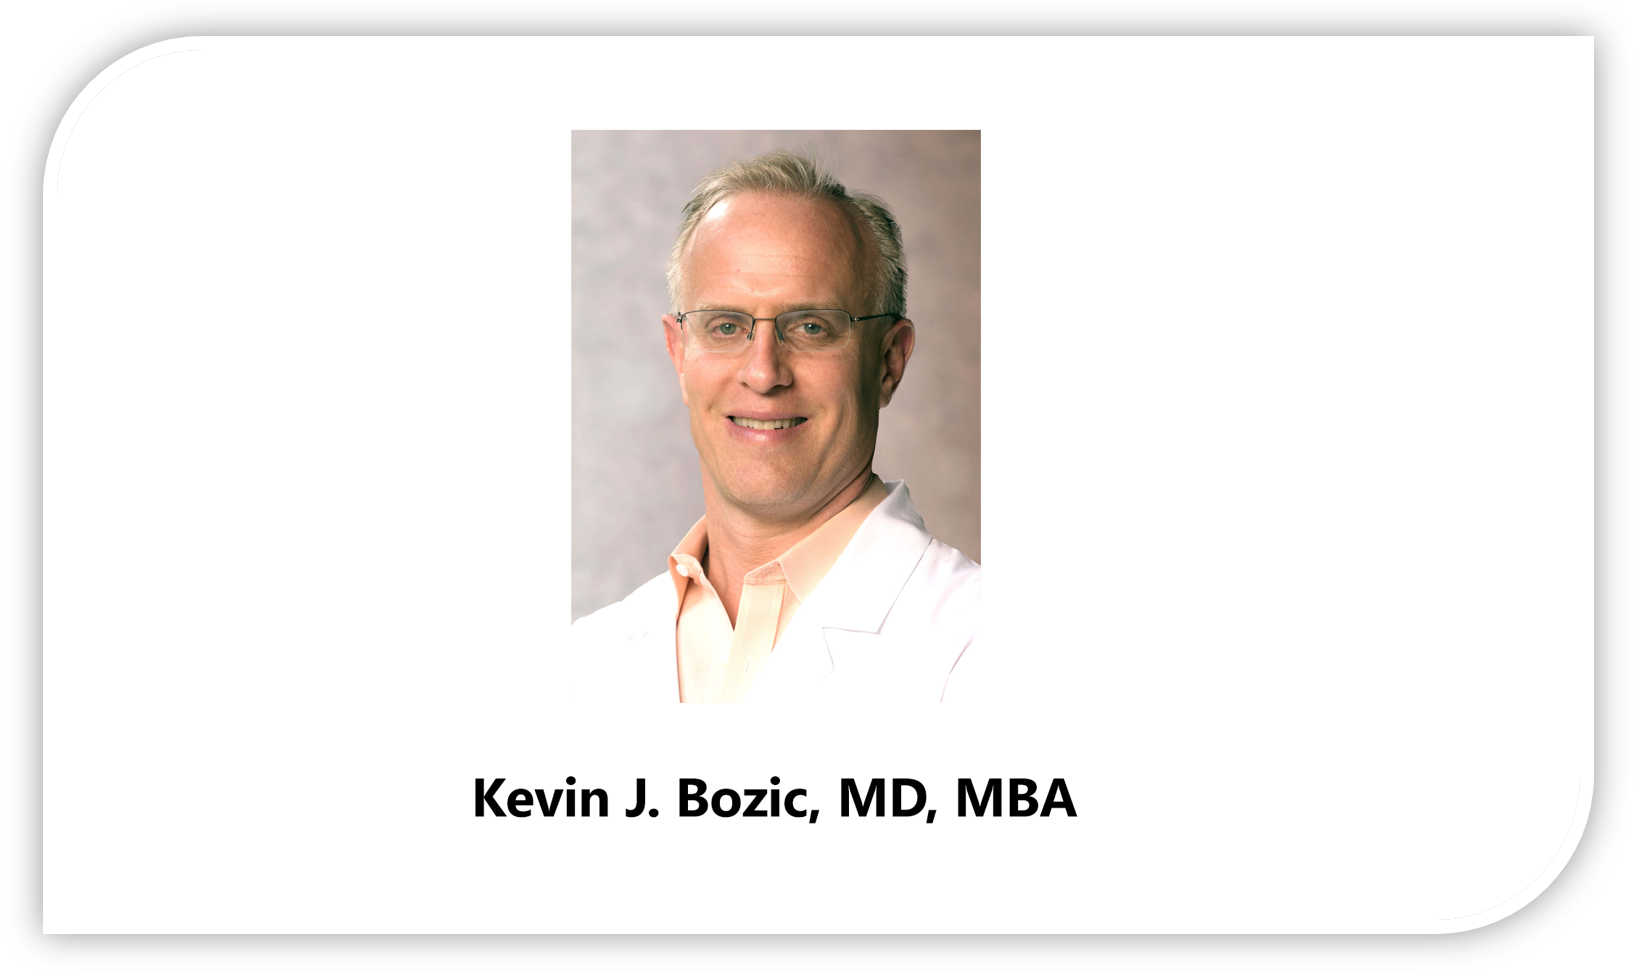 Orthopaedic surgeon Kevin J. Bozic, MD, MBA